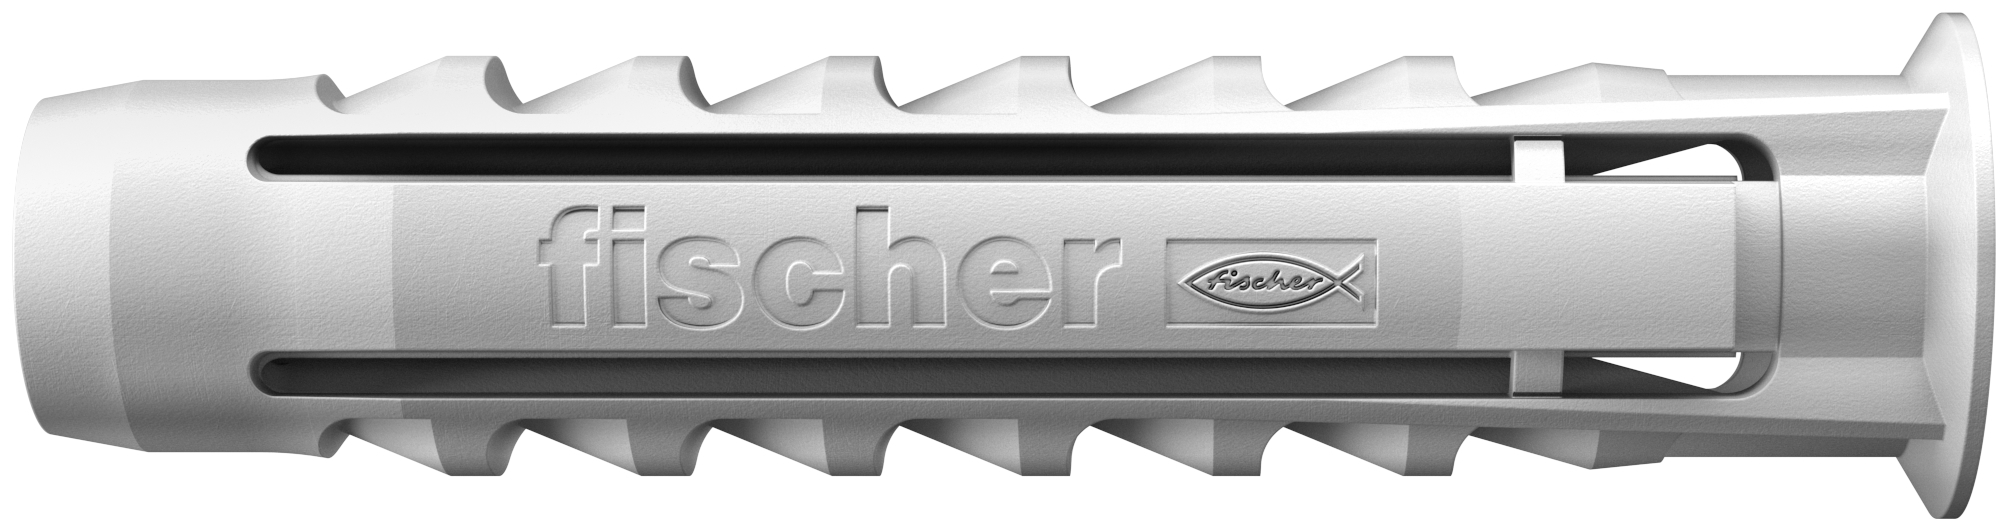 fischer Big Pack Tasselli SX 6 (250 Tasselli) (240 Pz.) Busta di tasselli formato convenienza fie2771